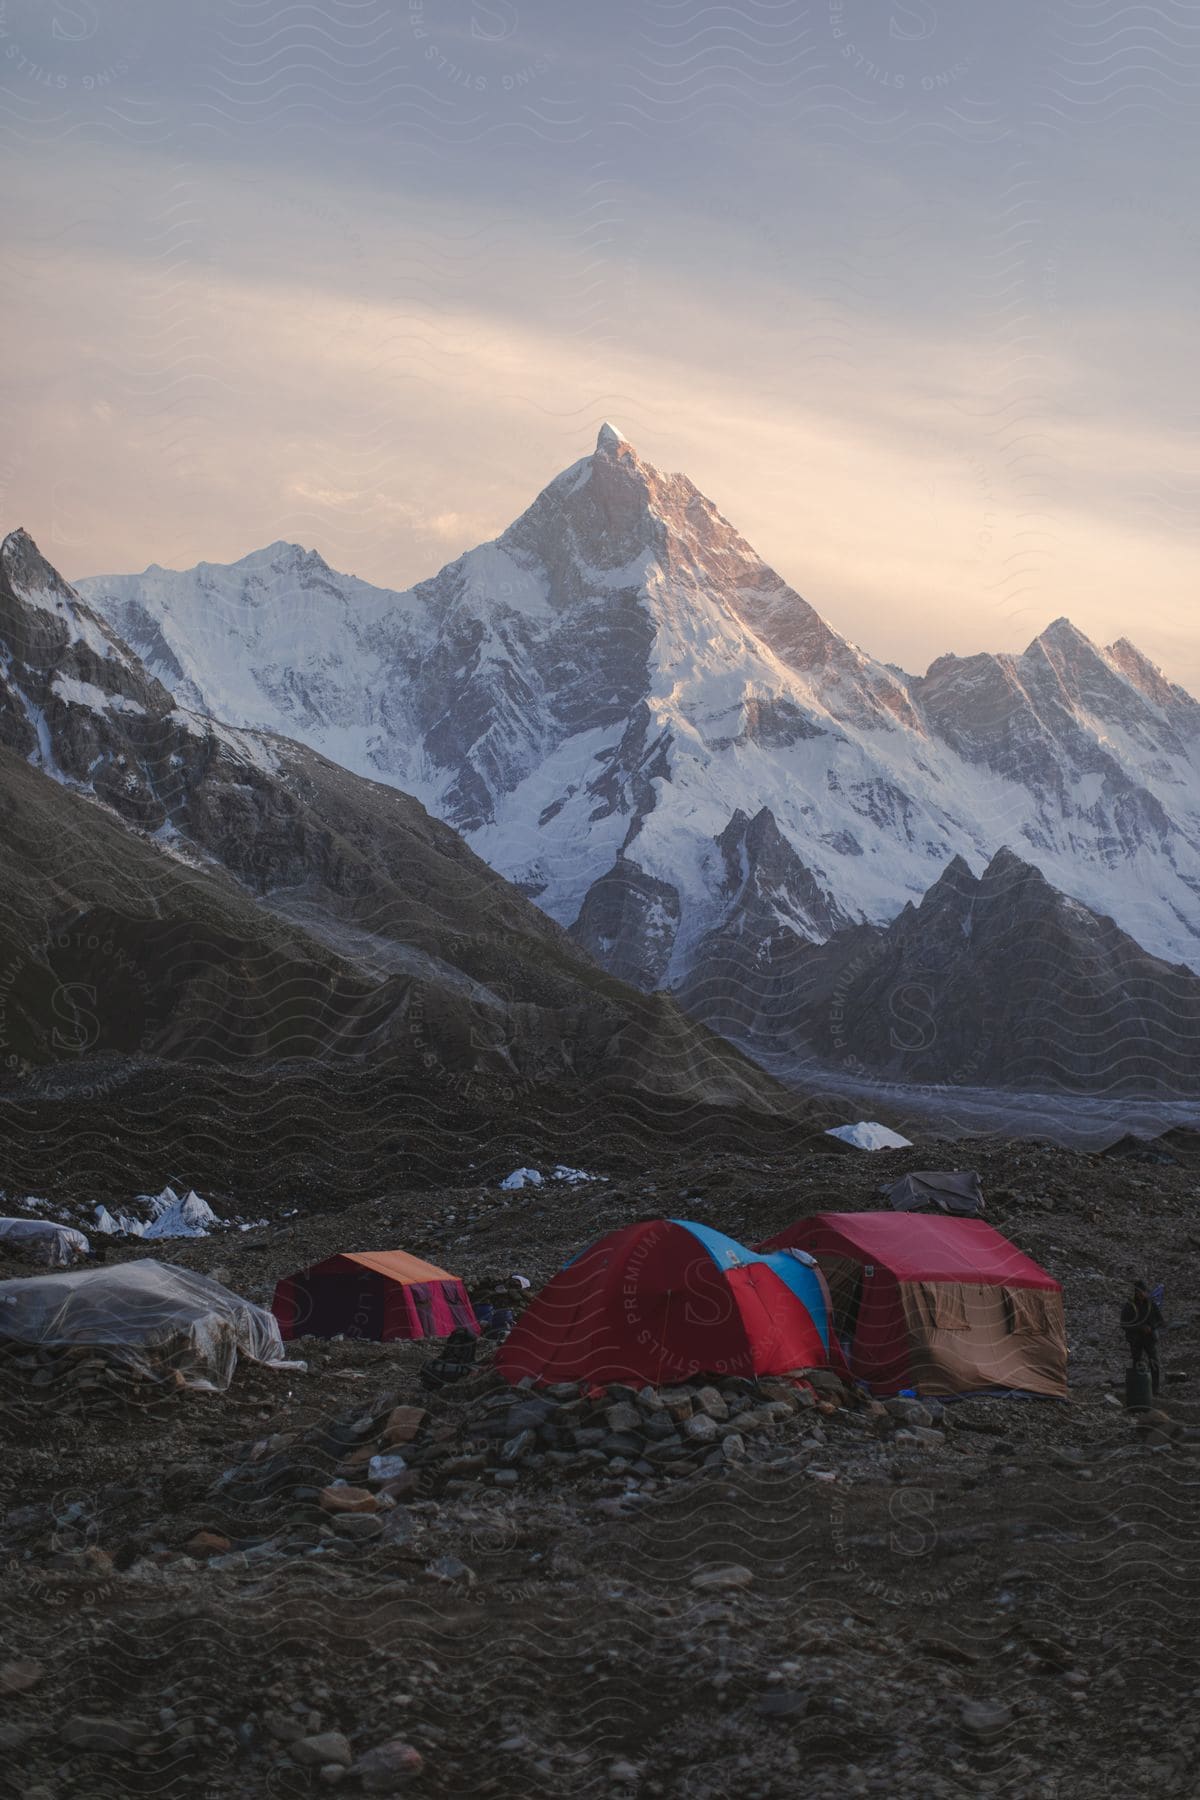 A campsite near snowy mountains in the karakoram mountain range in pakistan